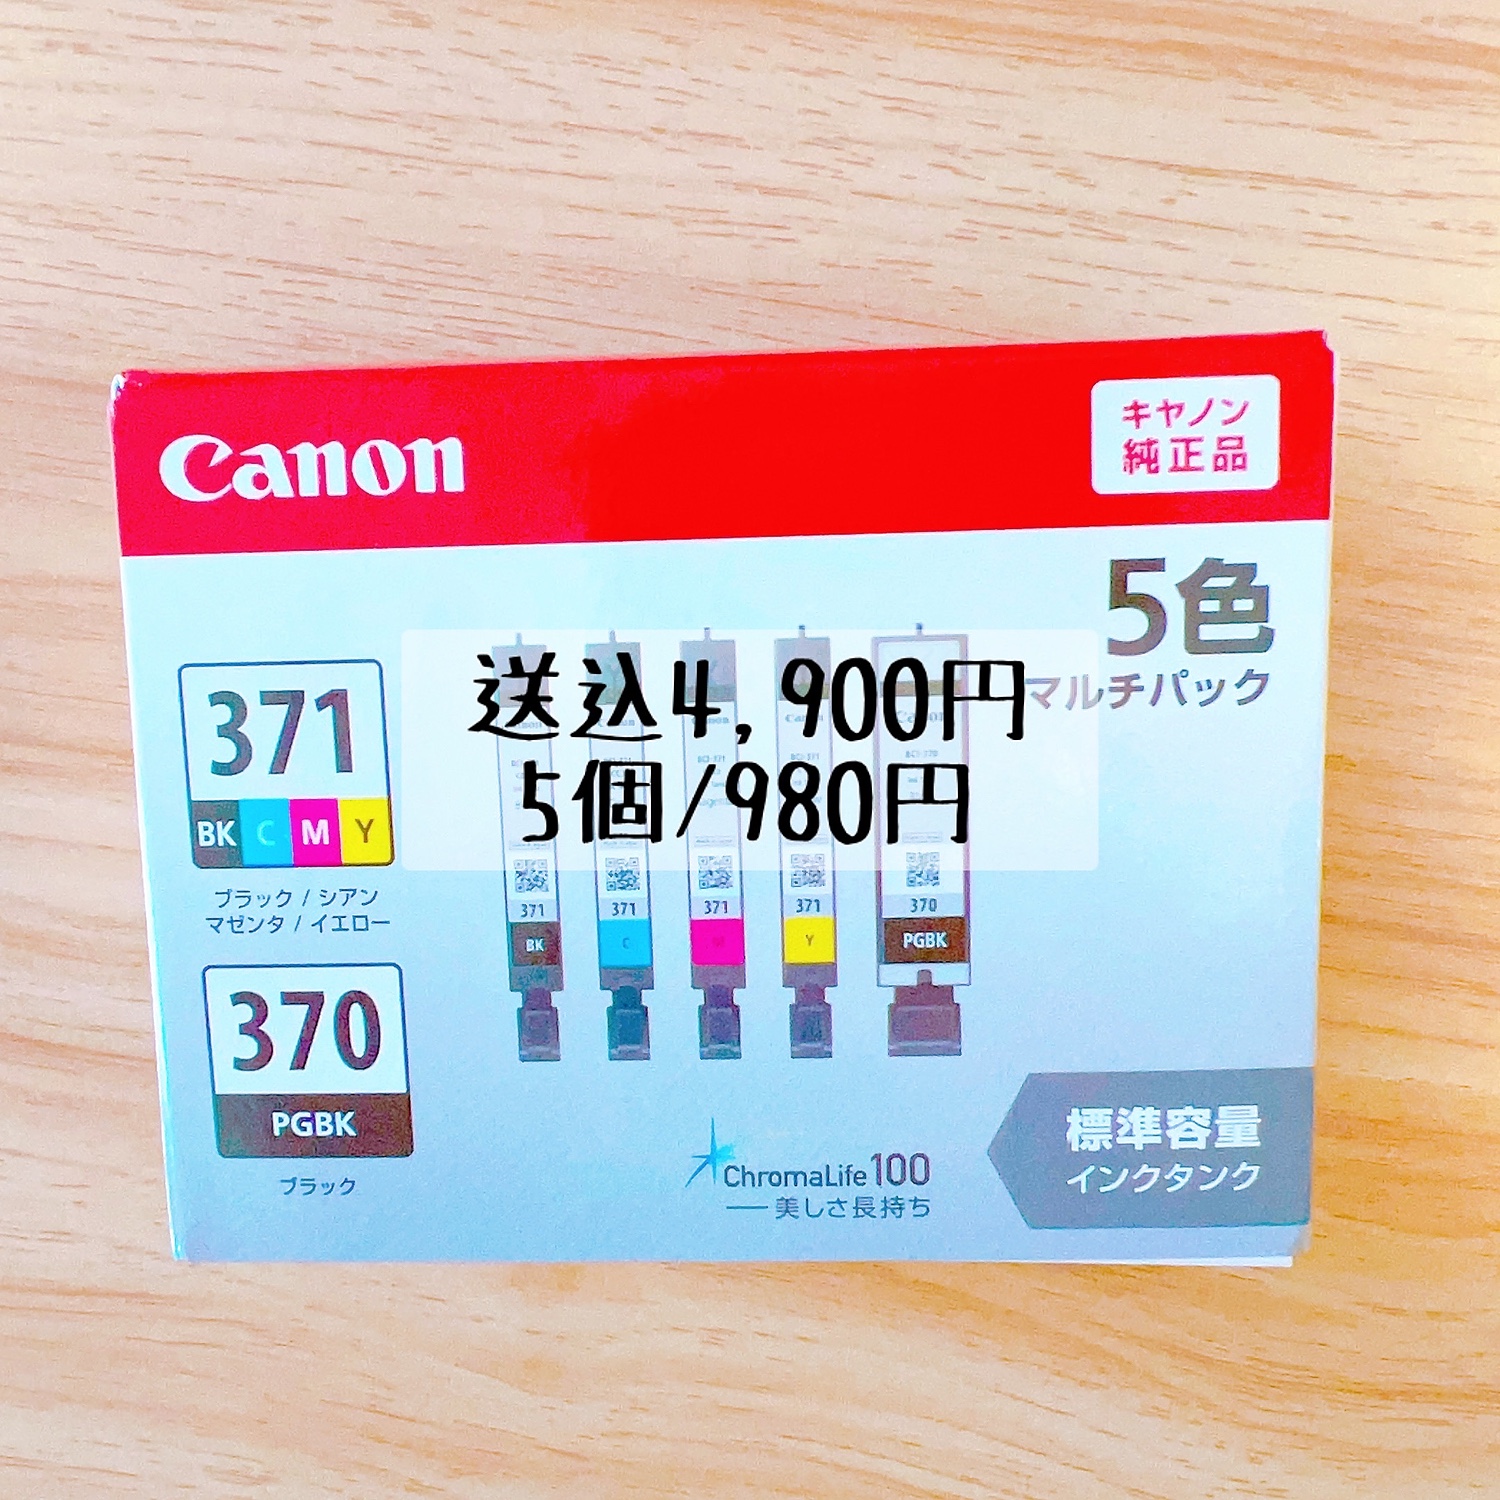 Canon BCI-371+370/5MP